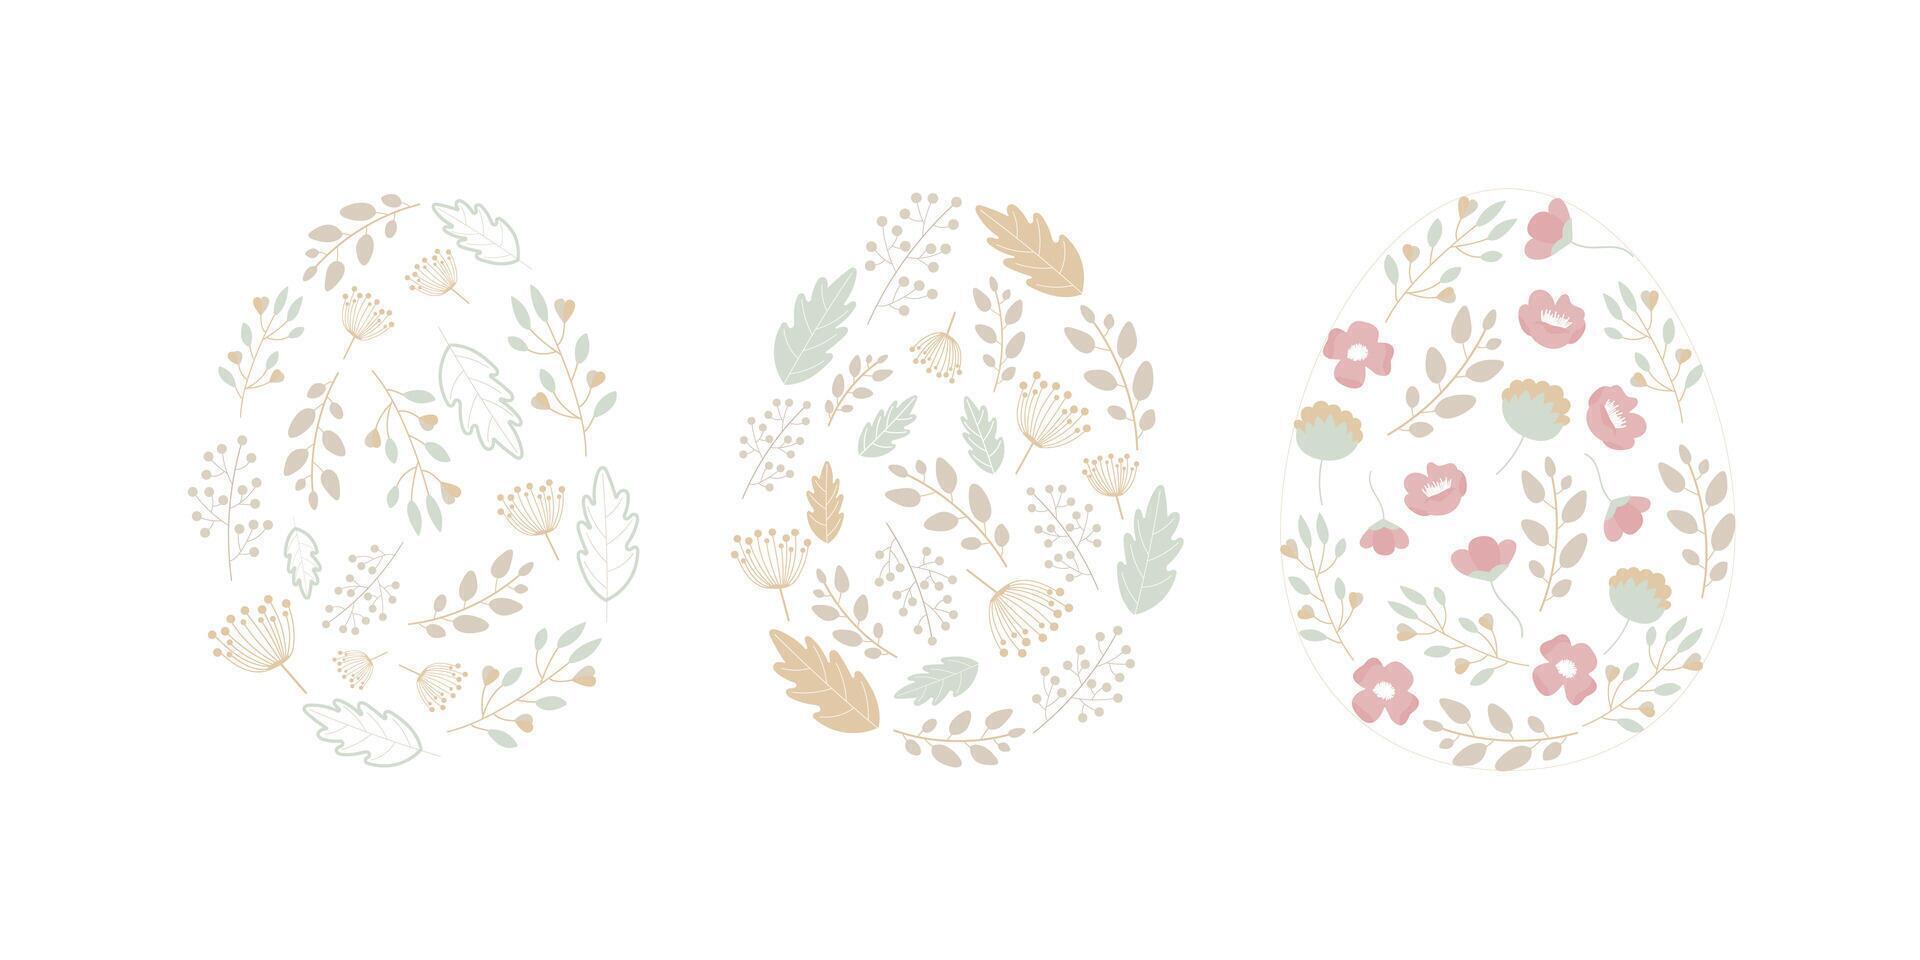 påsk ägg med blommig mönster i folk stil. vykort, baner, affisch Lycklig påsk dag vektor